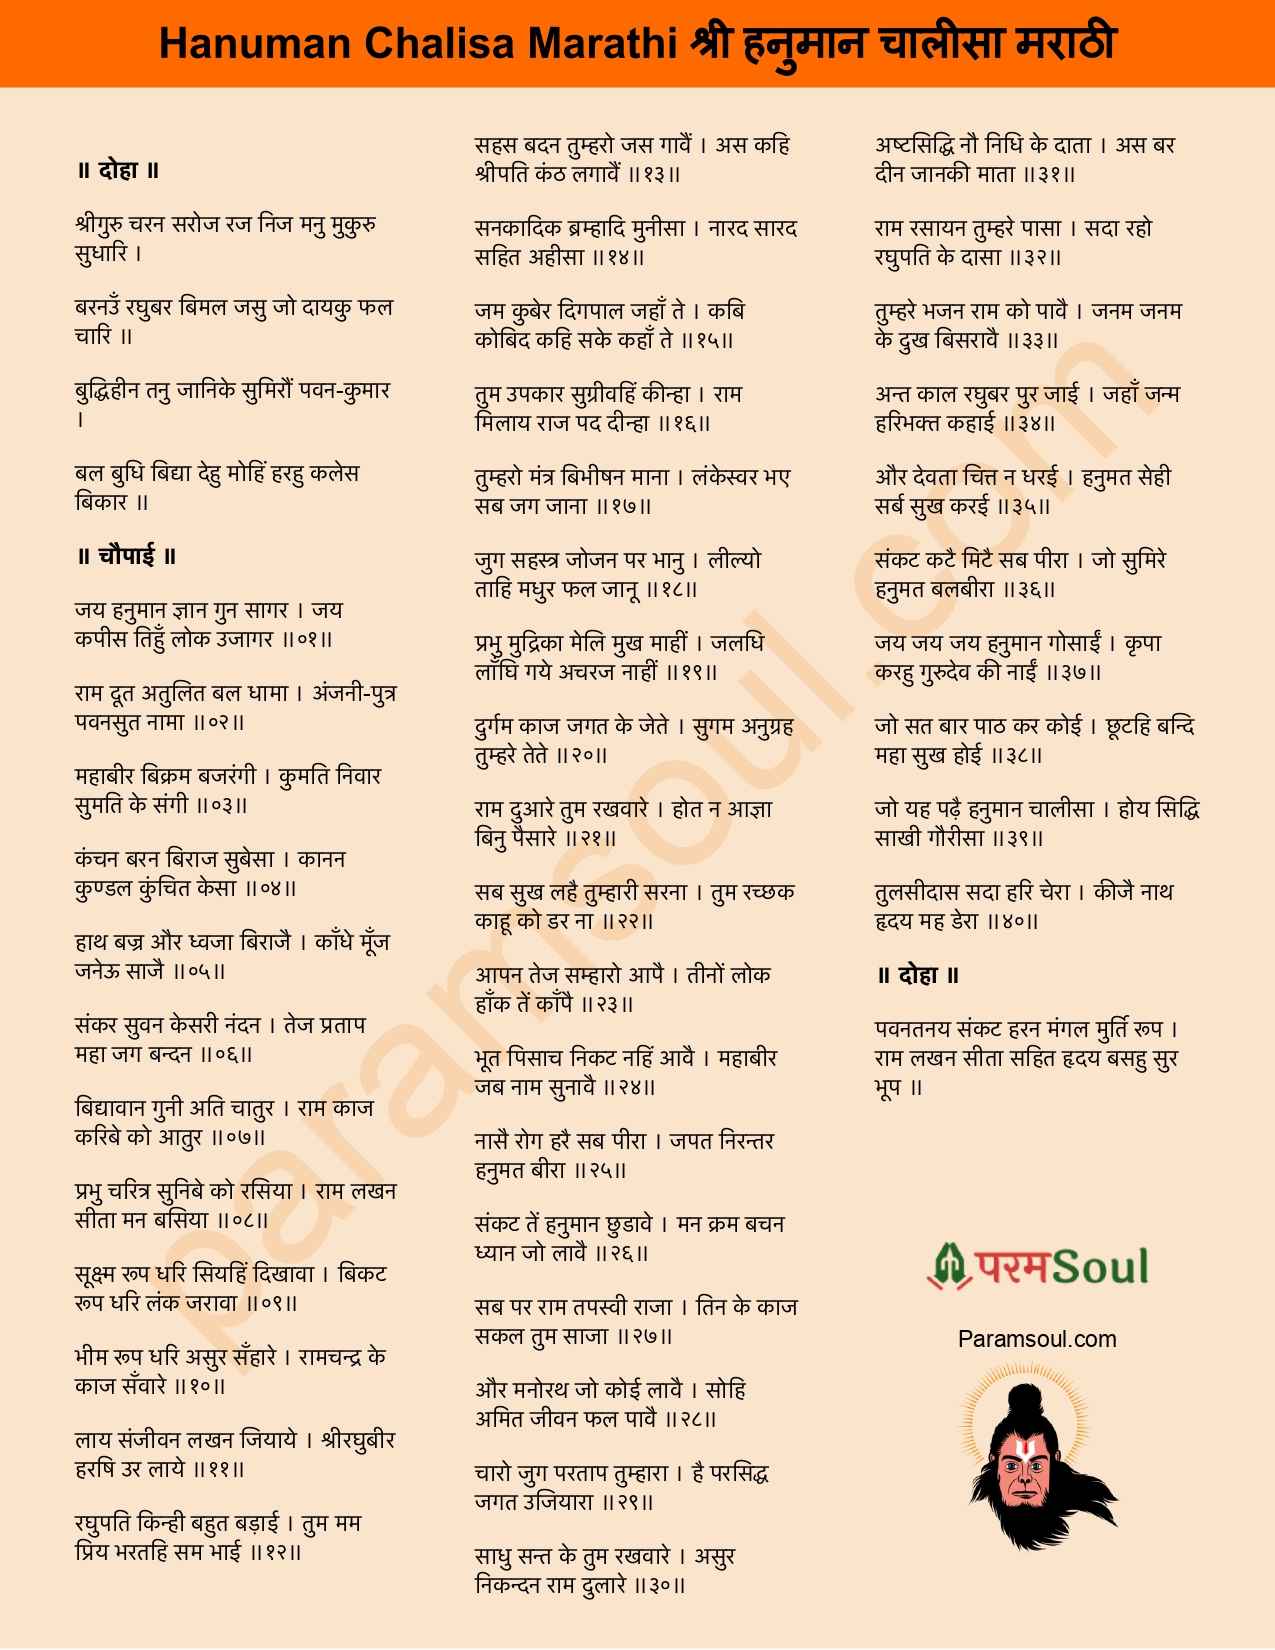 Hanuman Chalisa Marathi lyrics Image - हनुमान चालीसा मराठी गीत चित्र